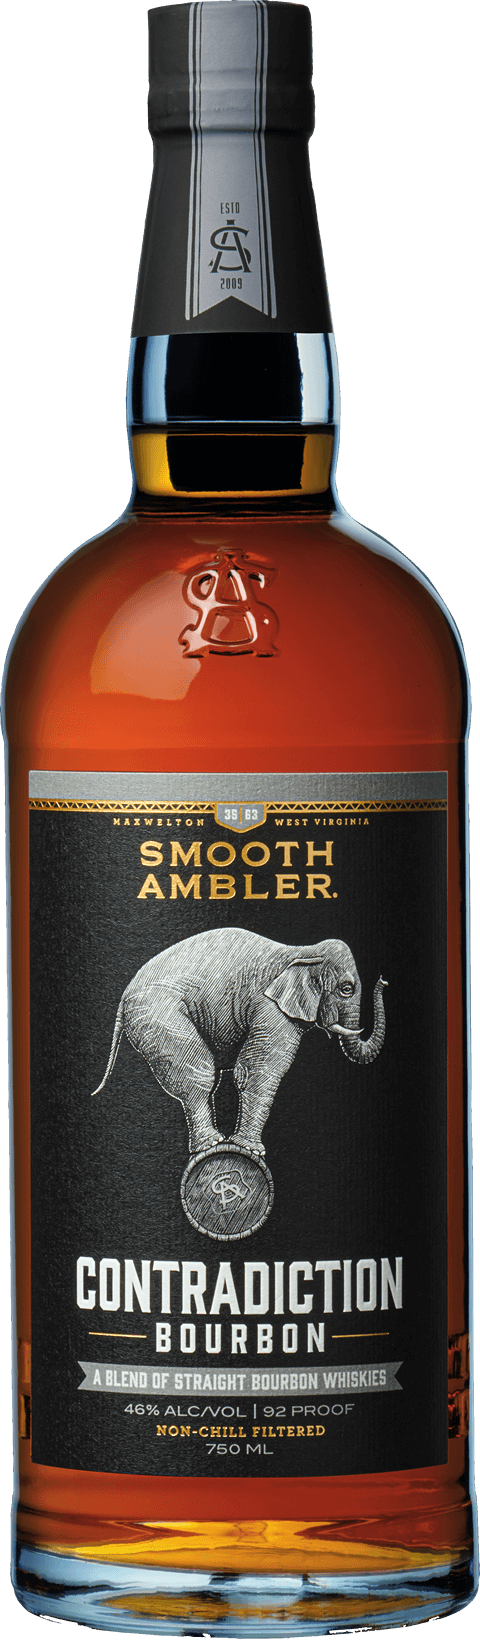 smooth-ambler-contradiction-bourbon-page-bottle